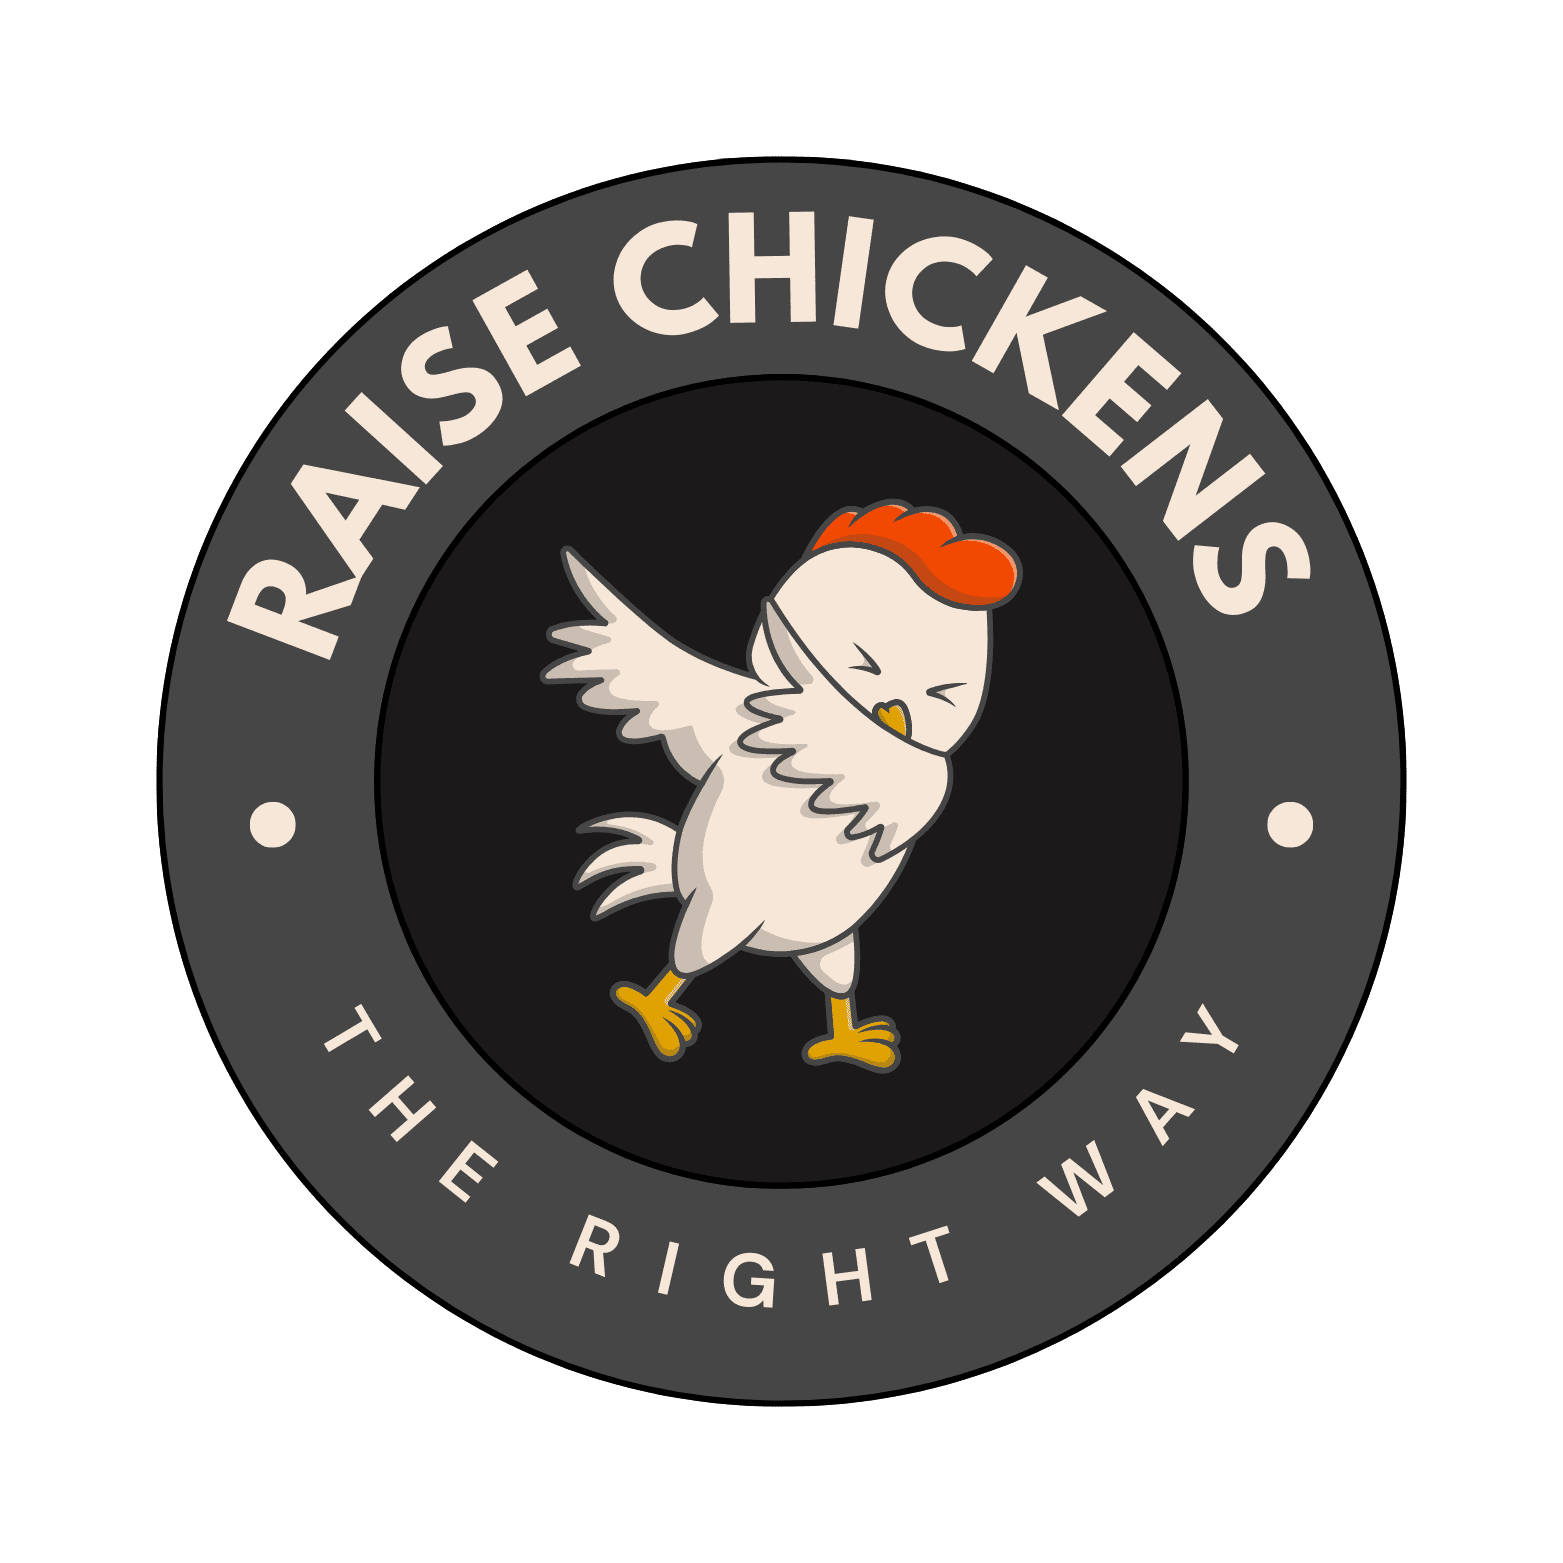 Raise Chickens Right